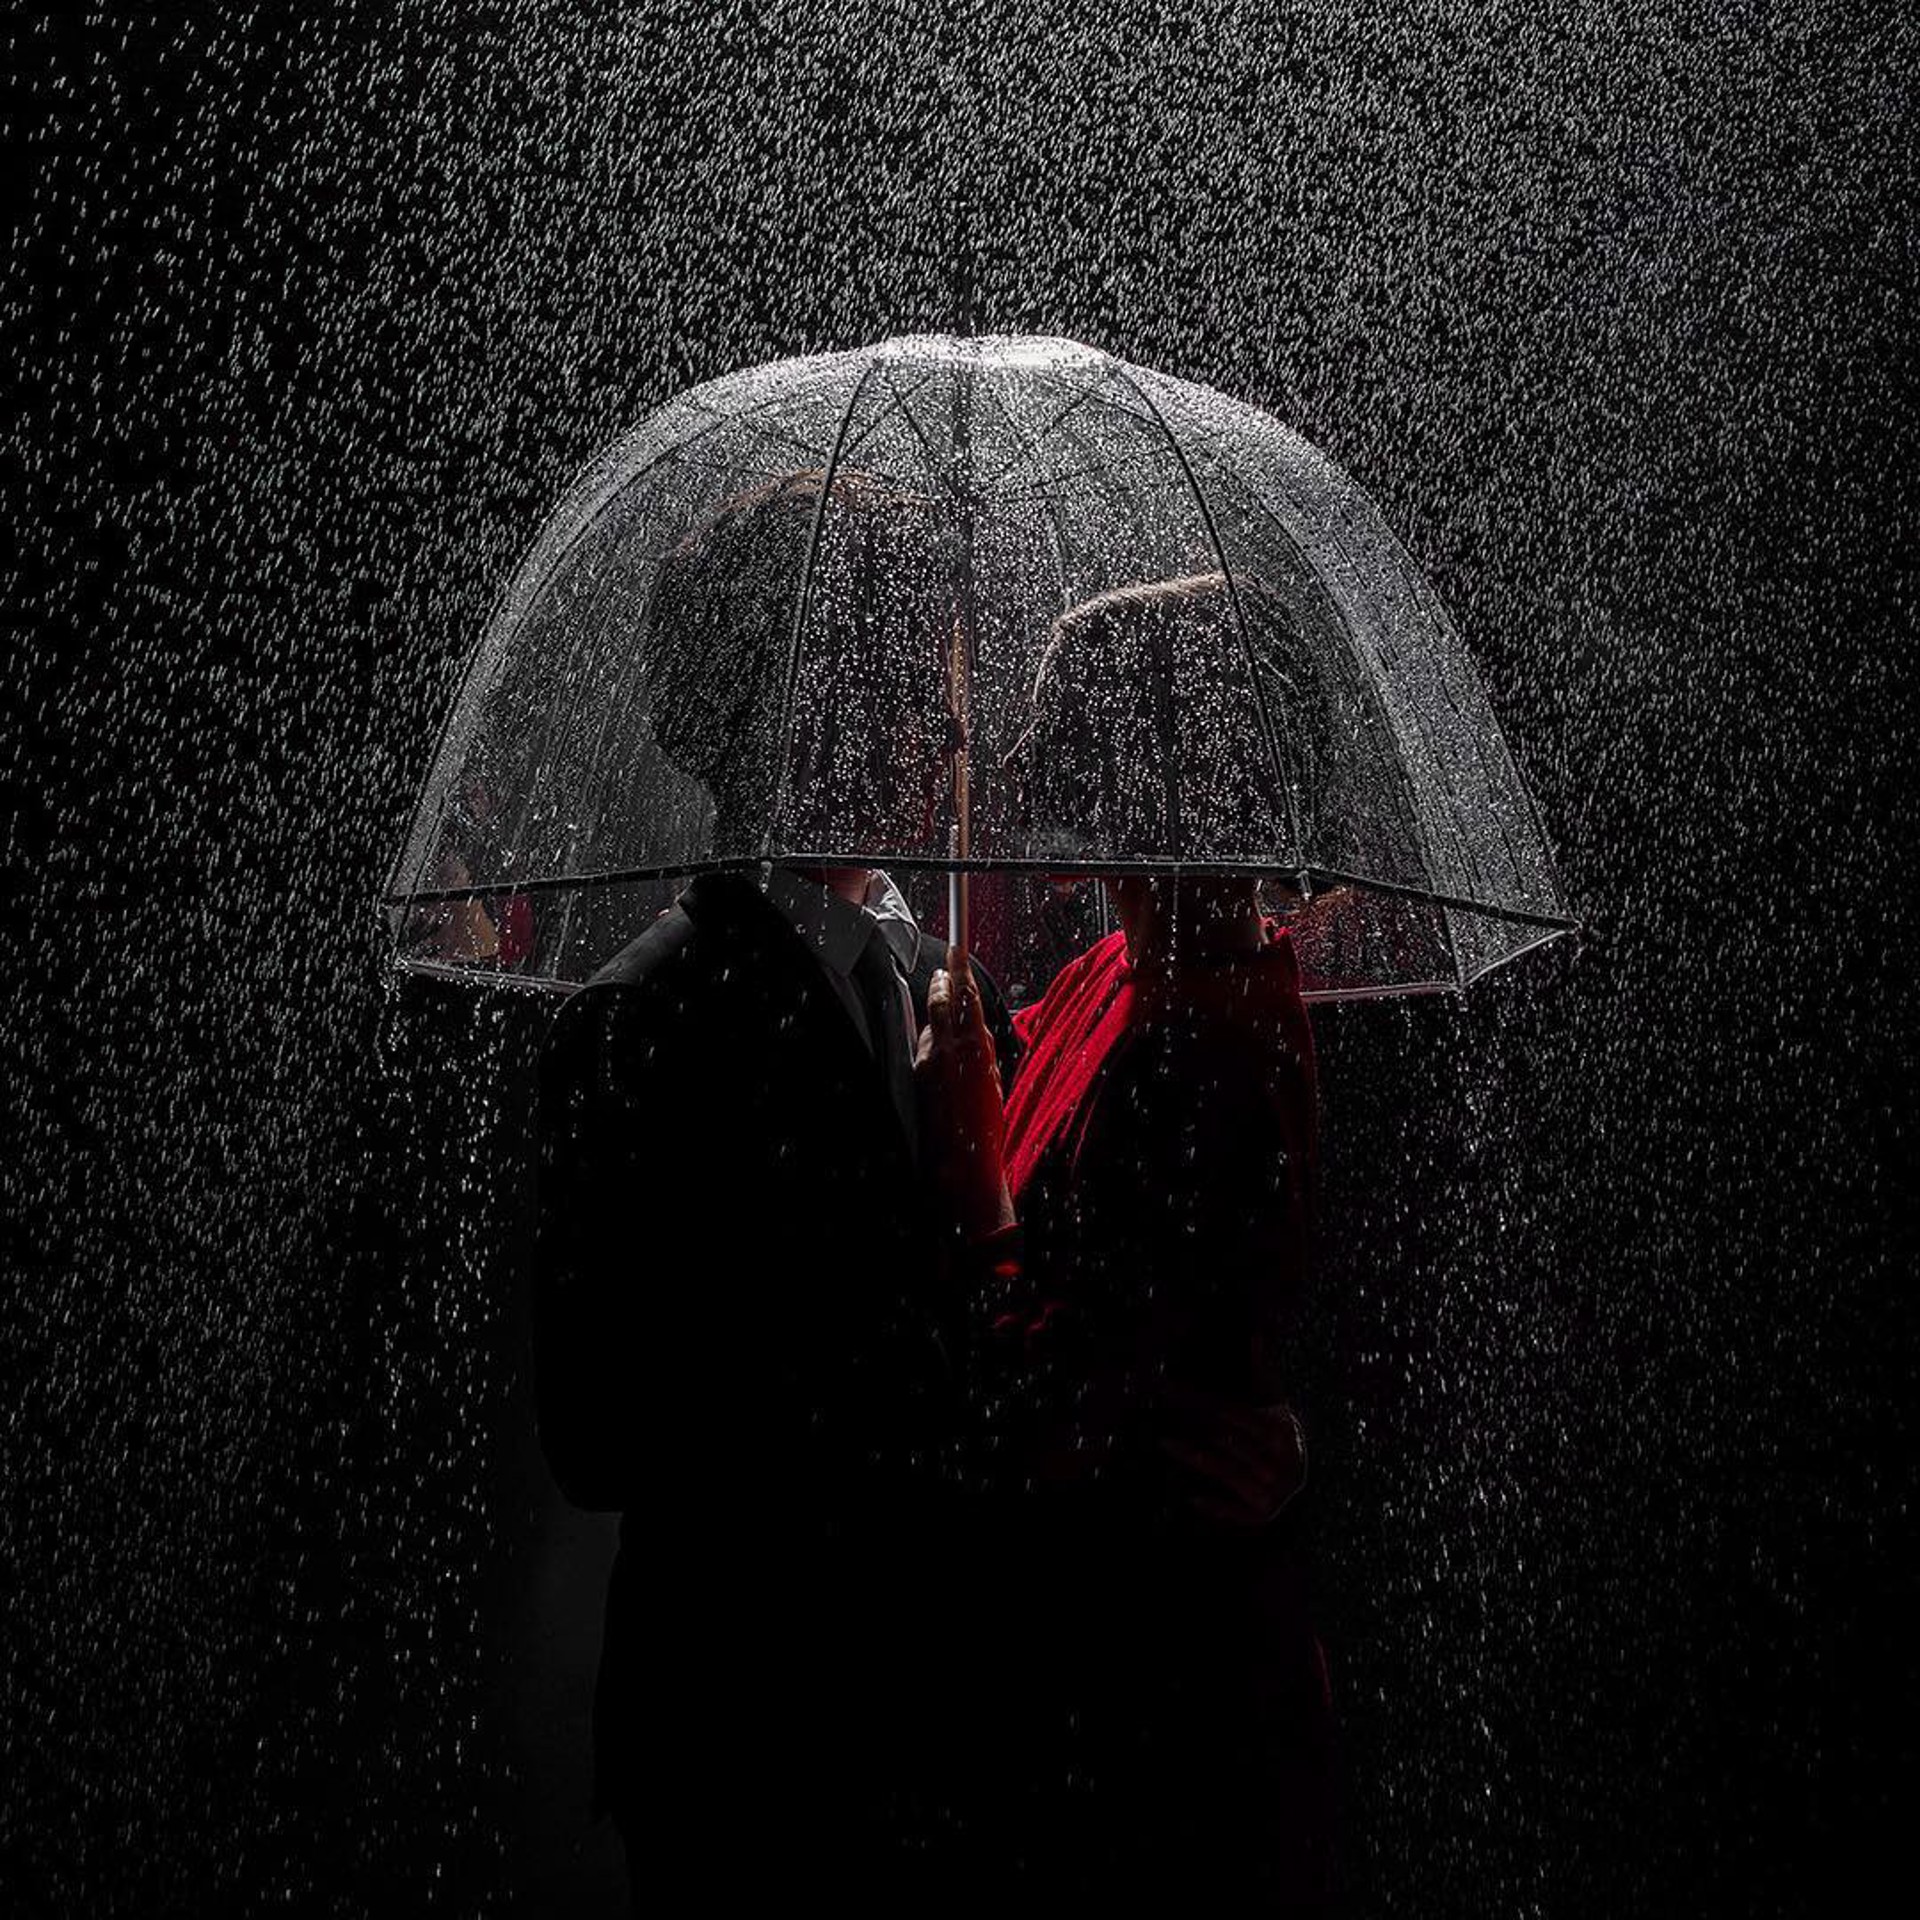 Under the Rain by Tyler Shields